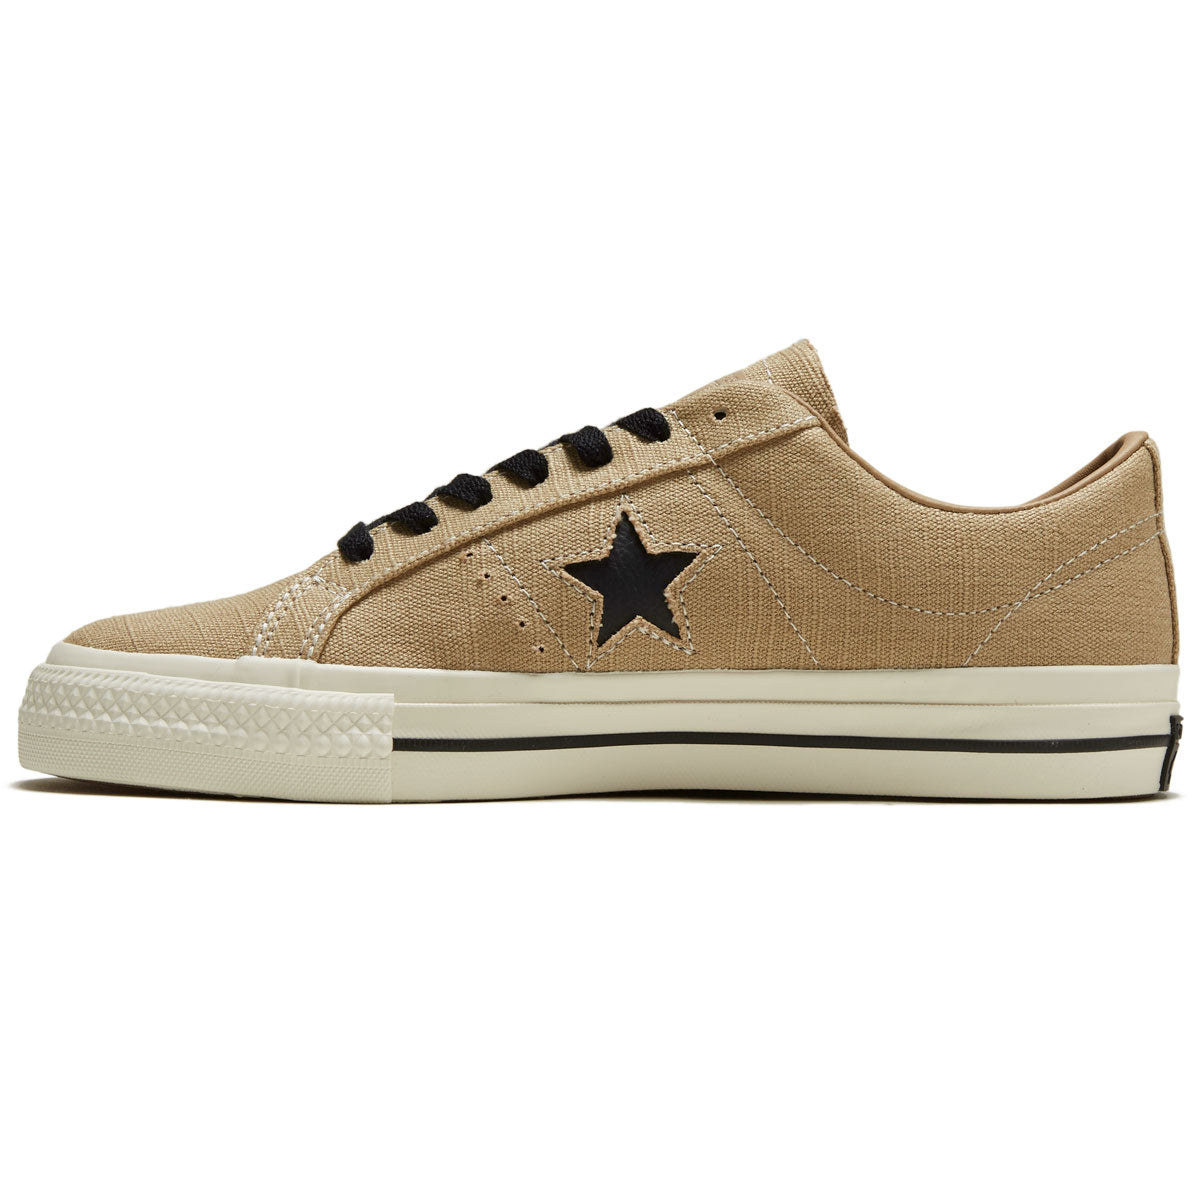 Converse One Star Pro Shoes - Nomad Khaki/Egret/Black – CCS